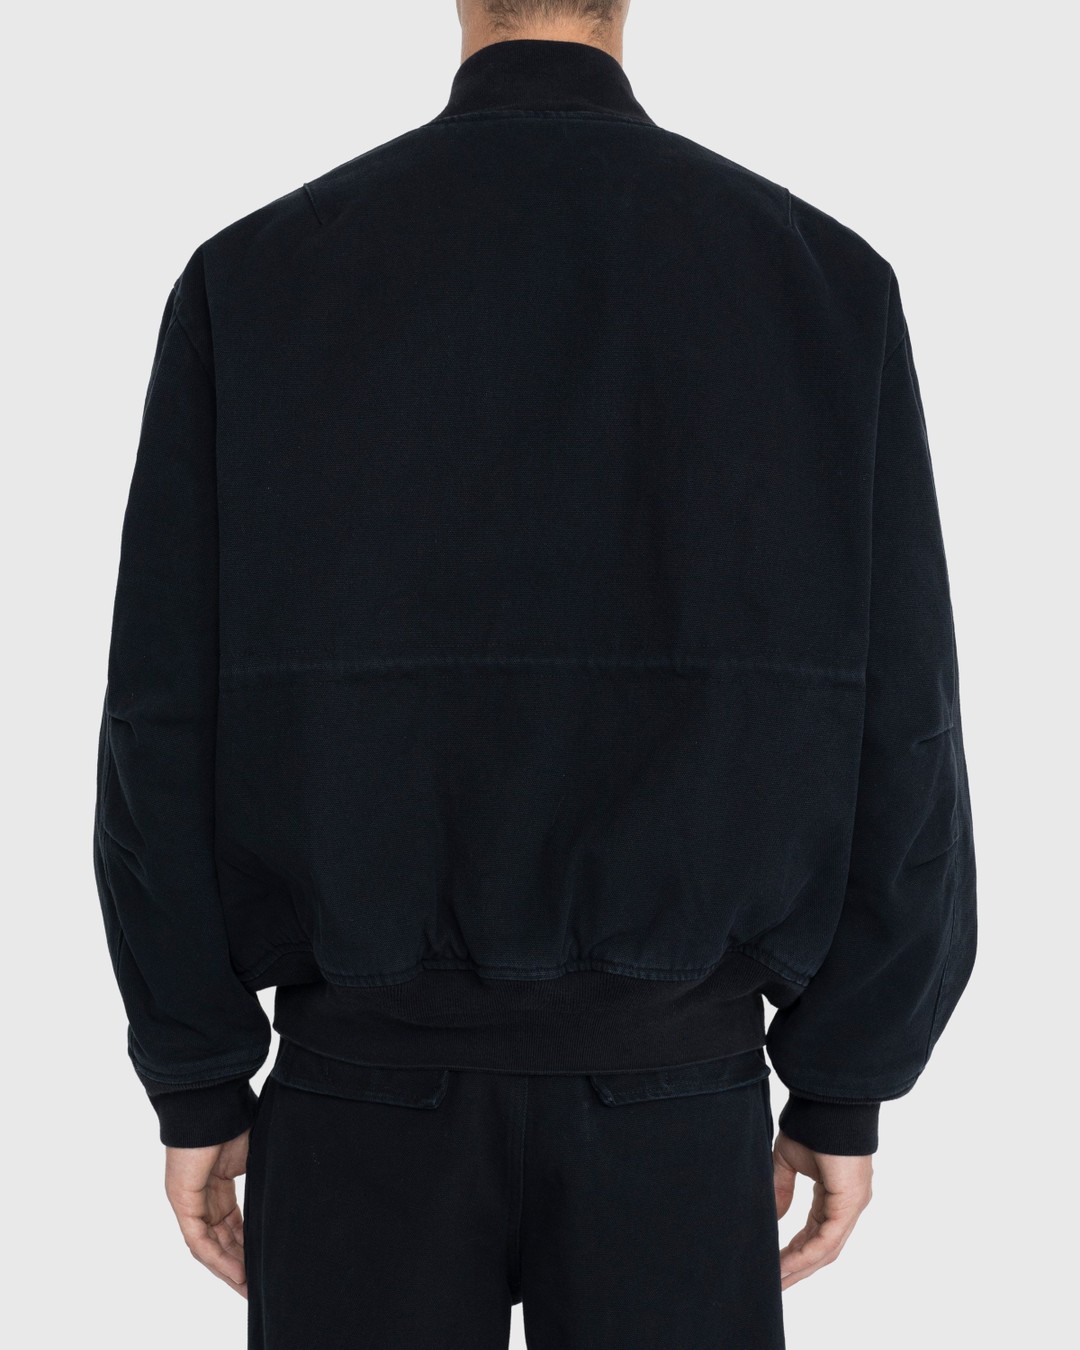 Acne Studios – Organic Cotton Bomber Jacket Black - Outerwear - Black - Image 7